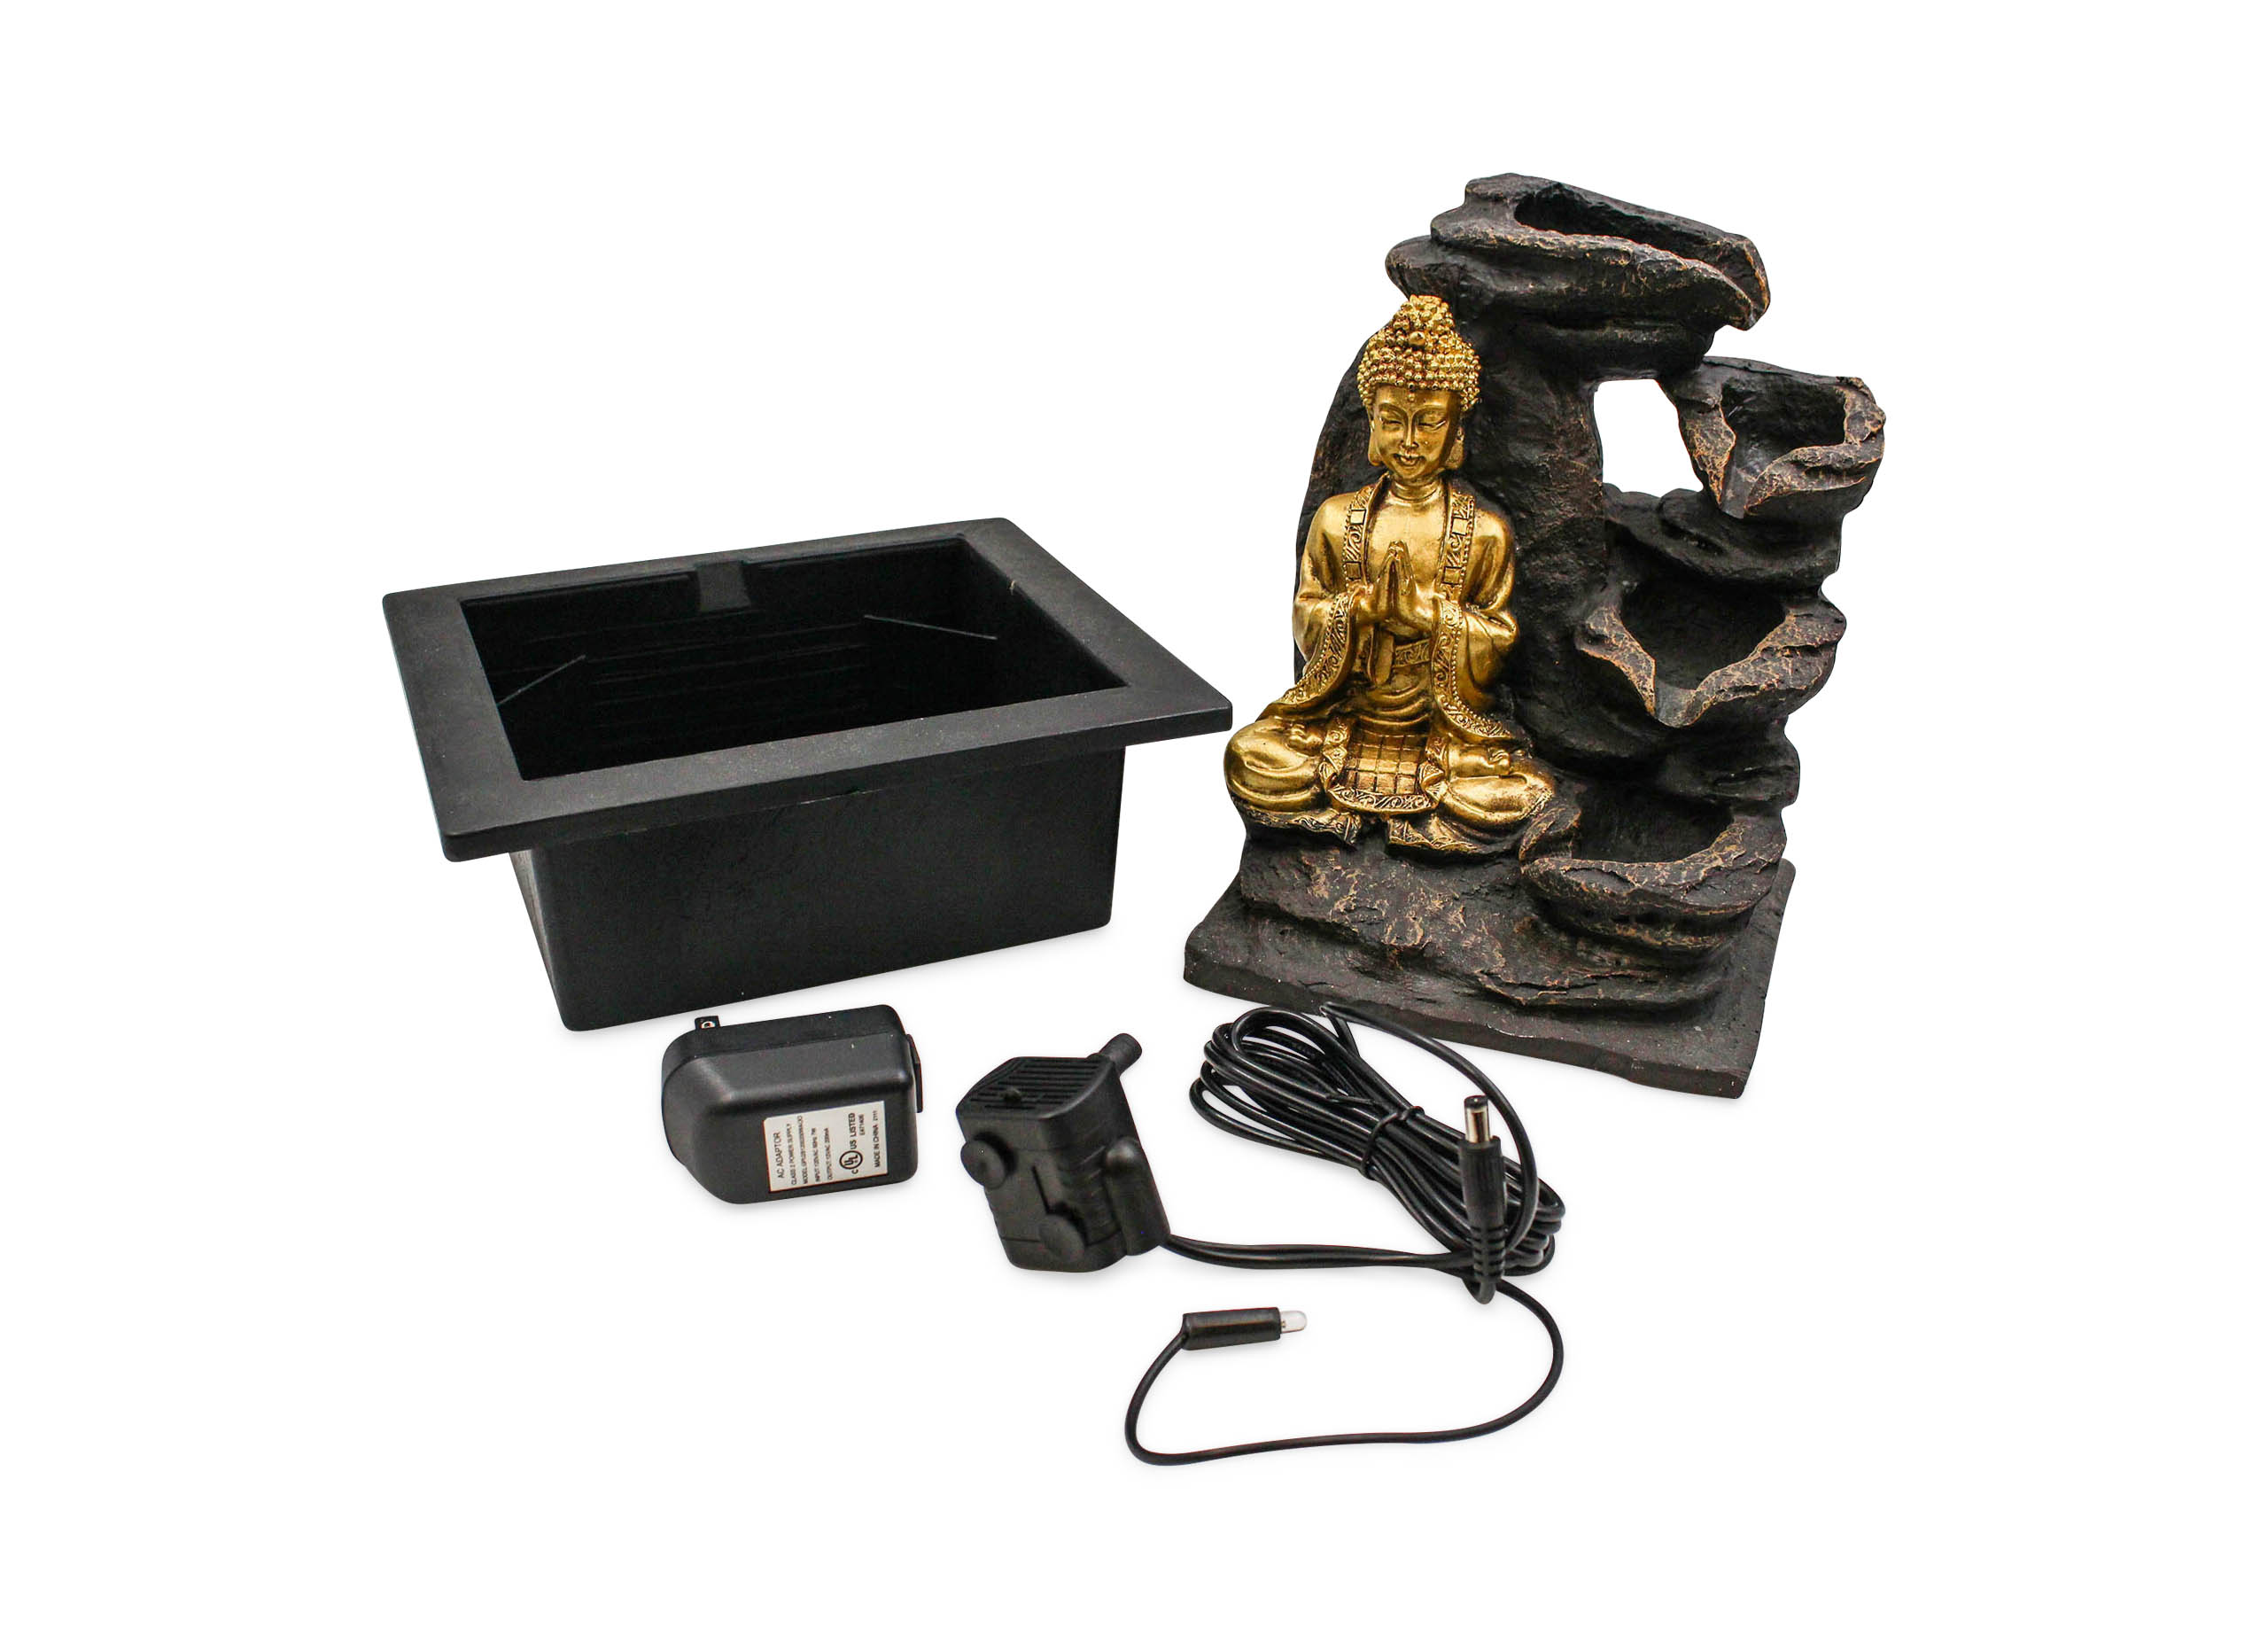 Meditating Golden Buddha Water Fountain - Crystal Dreams